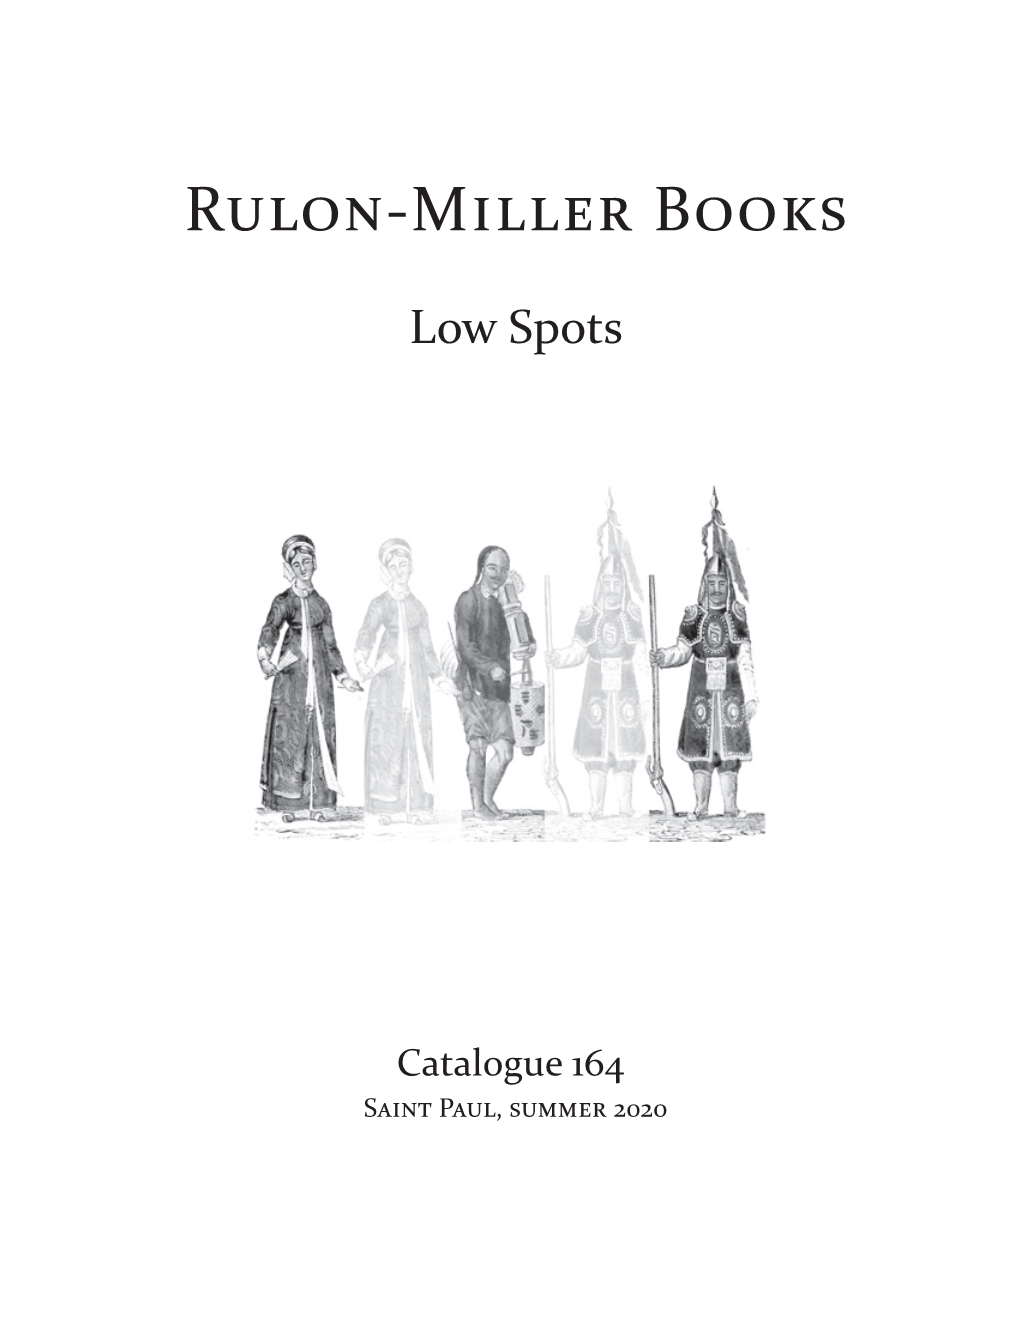 Rulon-Miller Books 400 Summit Avenue Saint Paul, MN 55102-2662 USA